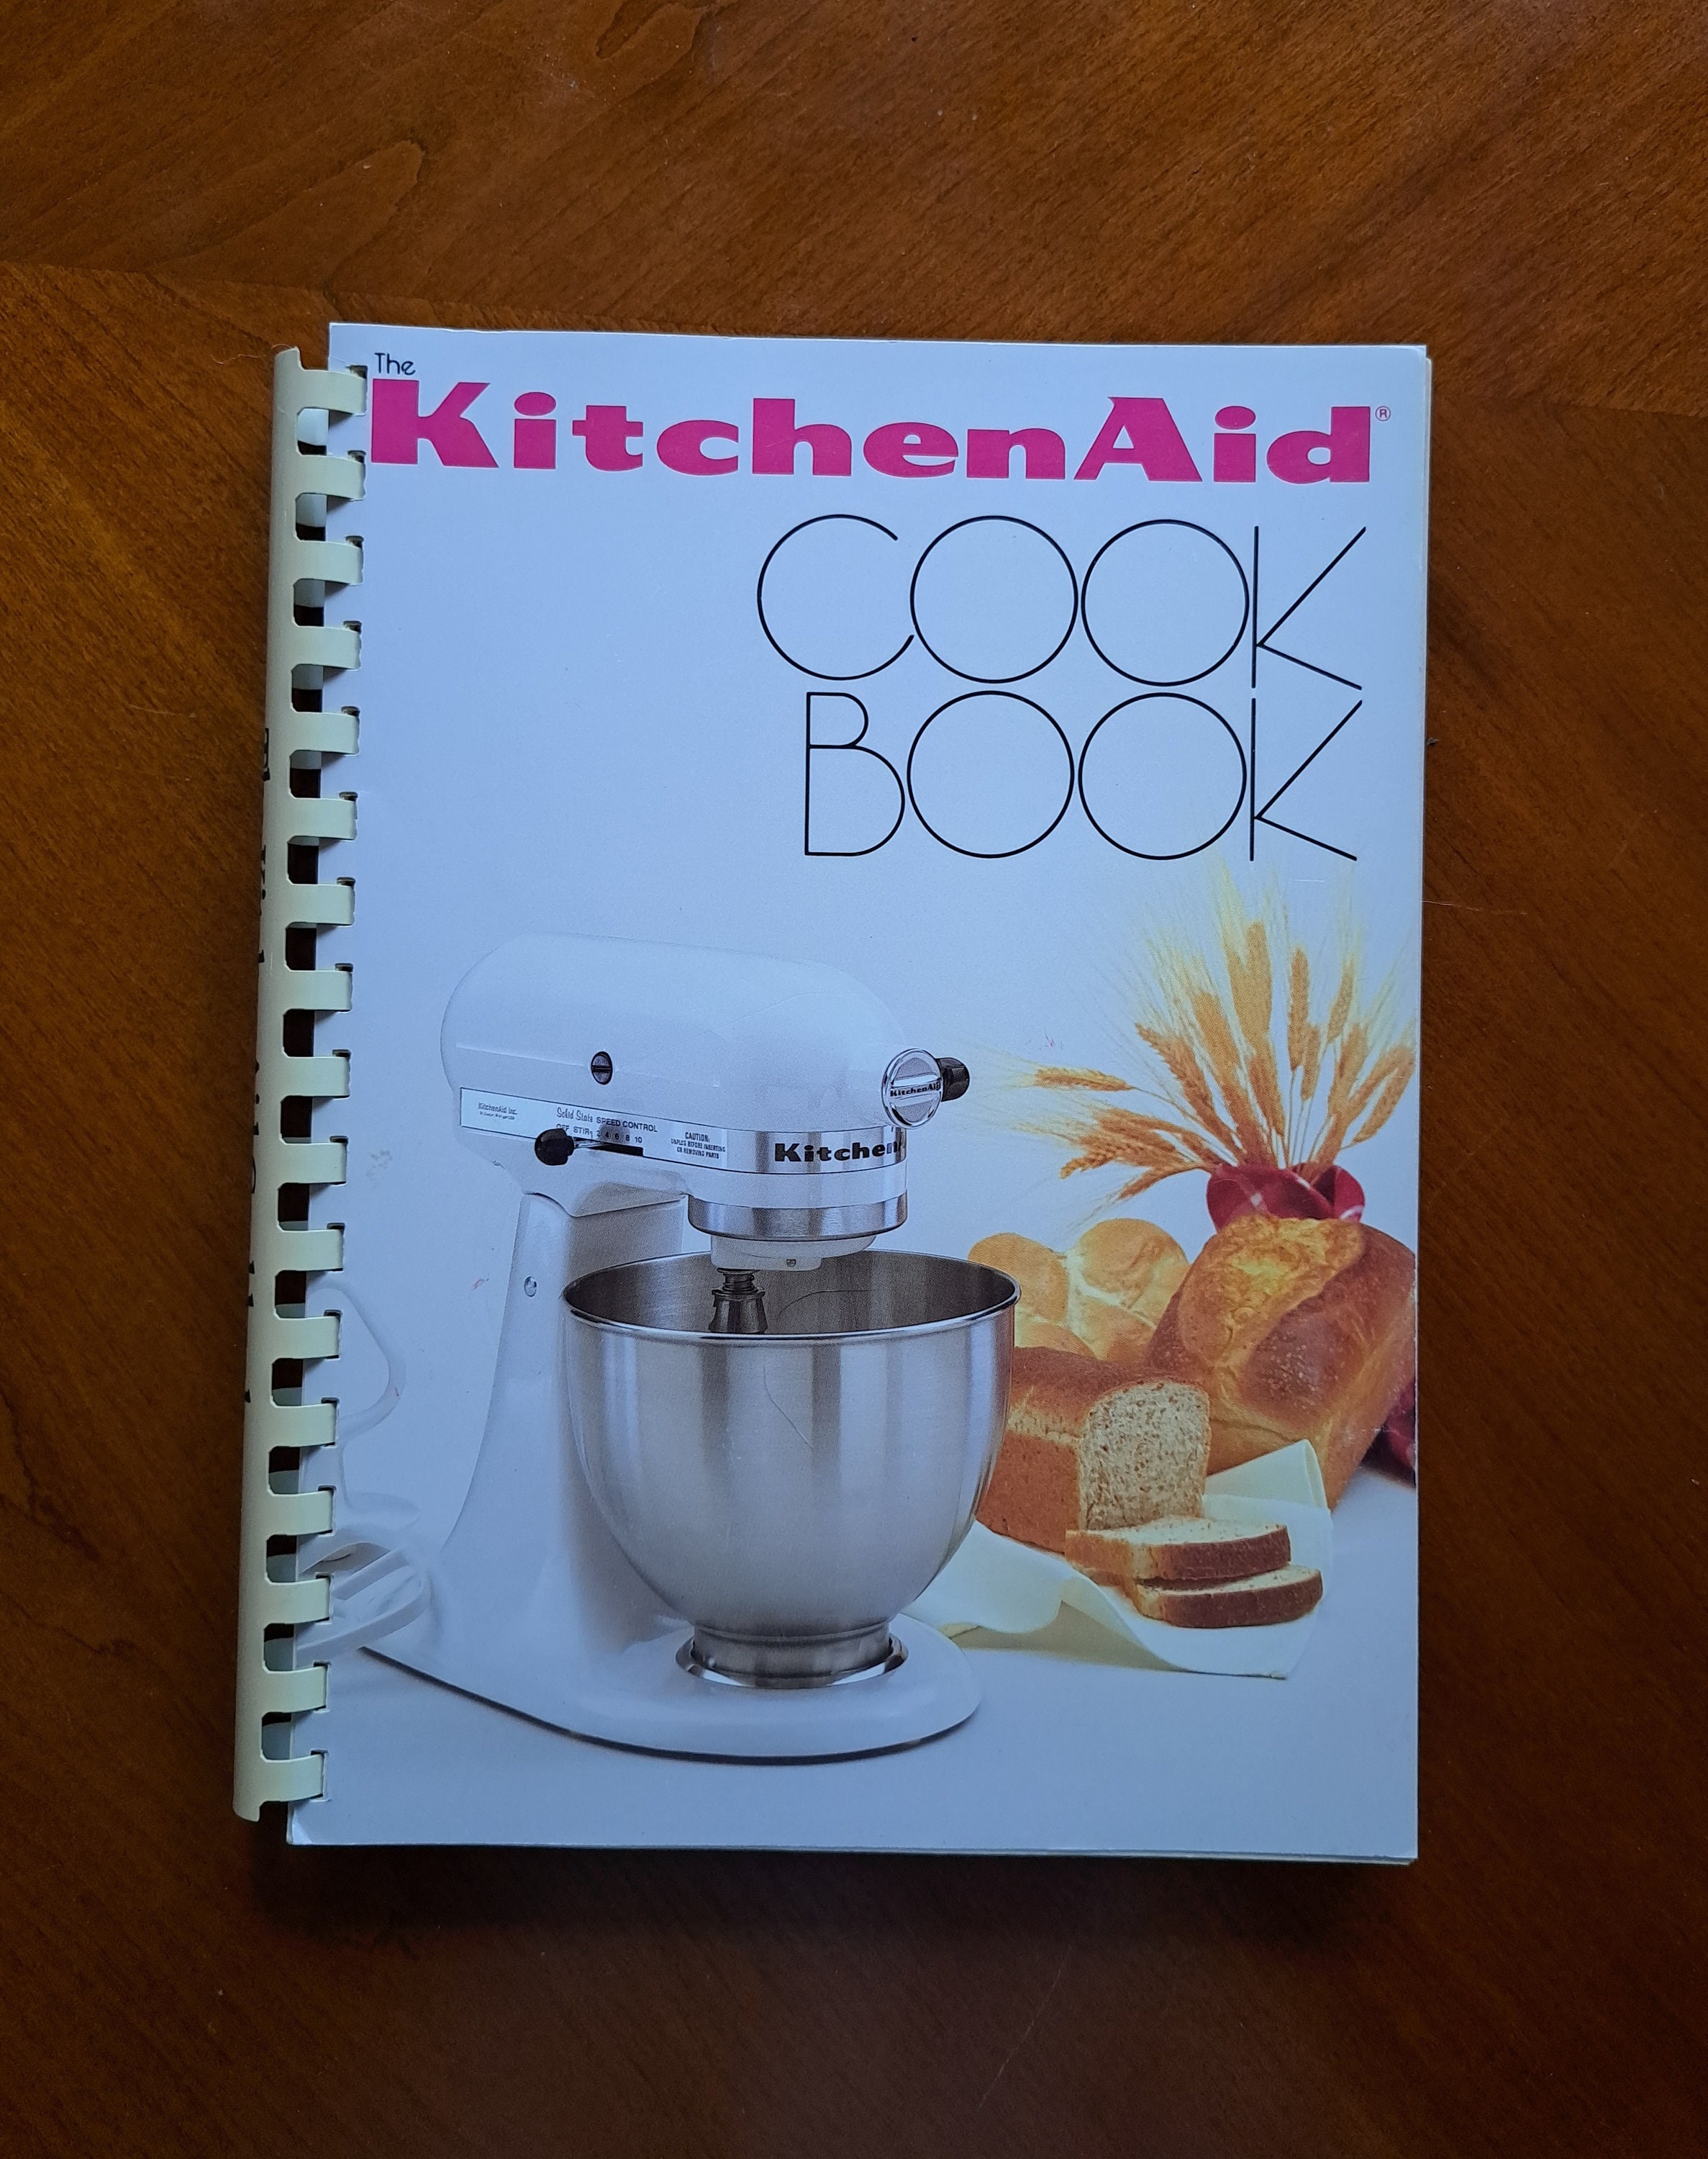 KitchenAid 3 Cookbooks in 1: Pies & Tarts; Cakes & Cupcakes; Breads -  Publications International Ltd.; Favorite Brand Name Recipes: 9781450810098  - AbeBooks